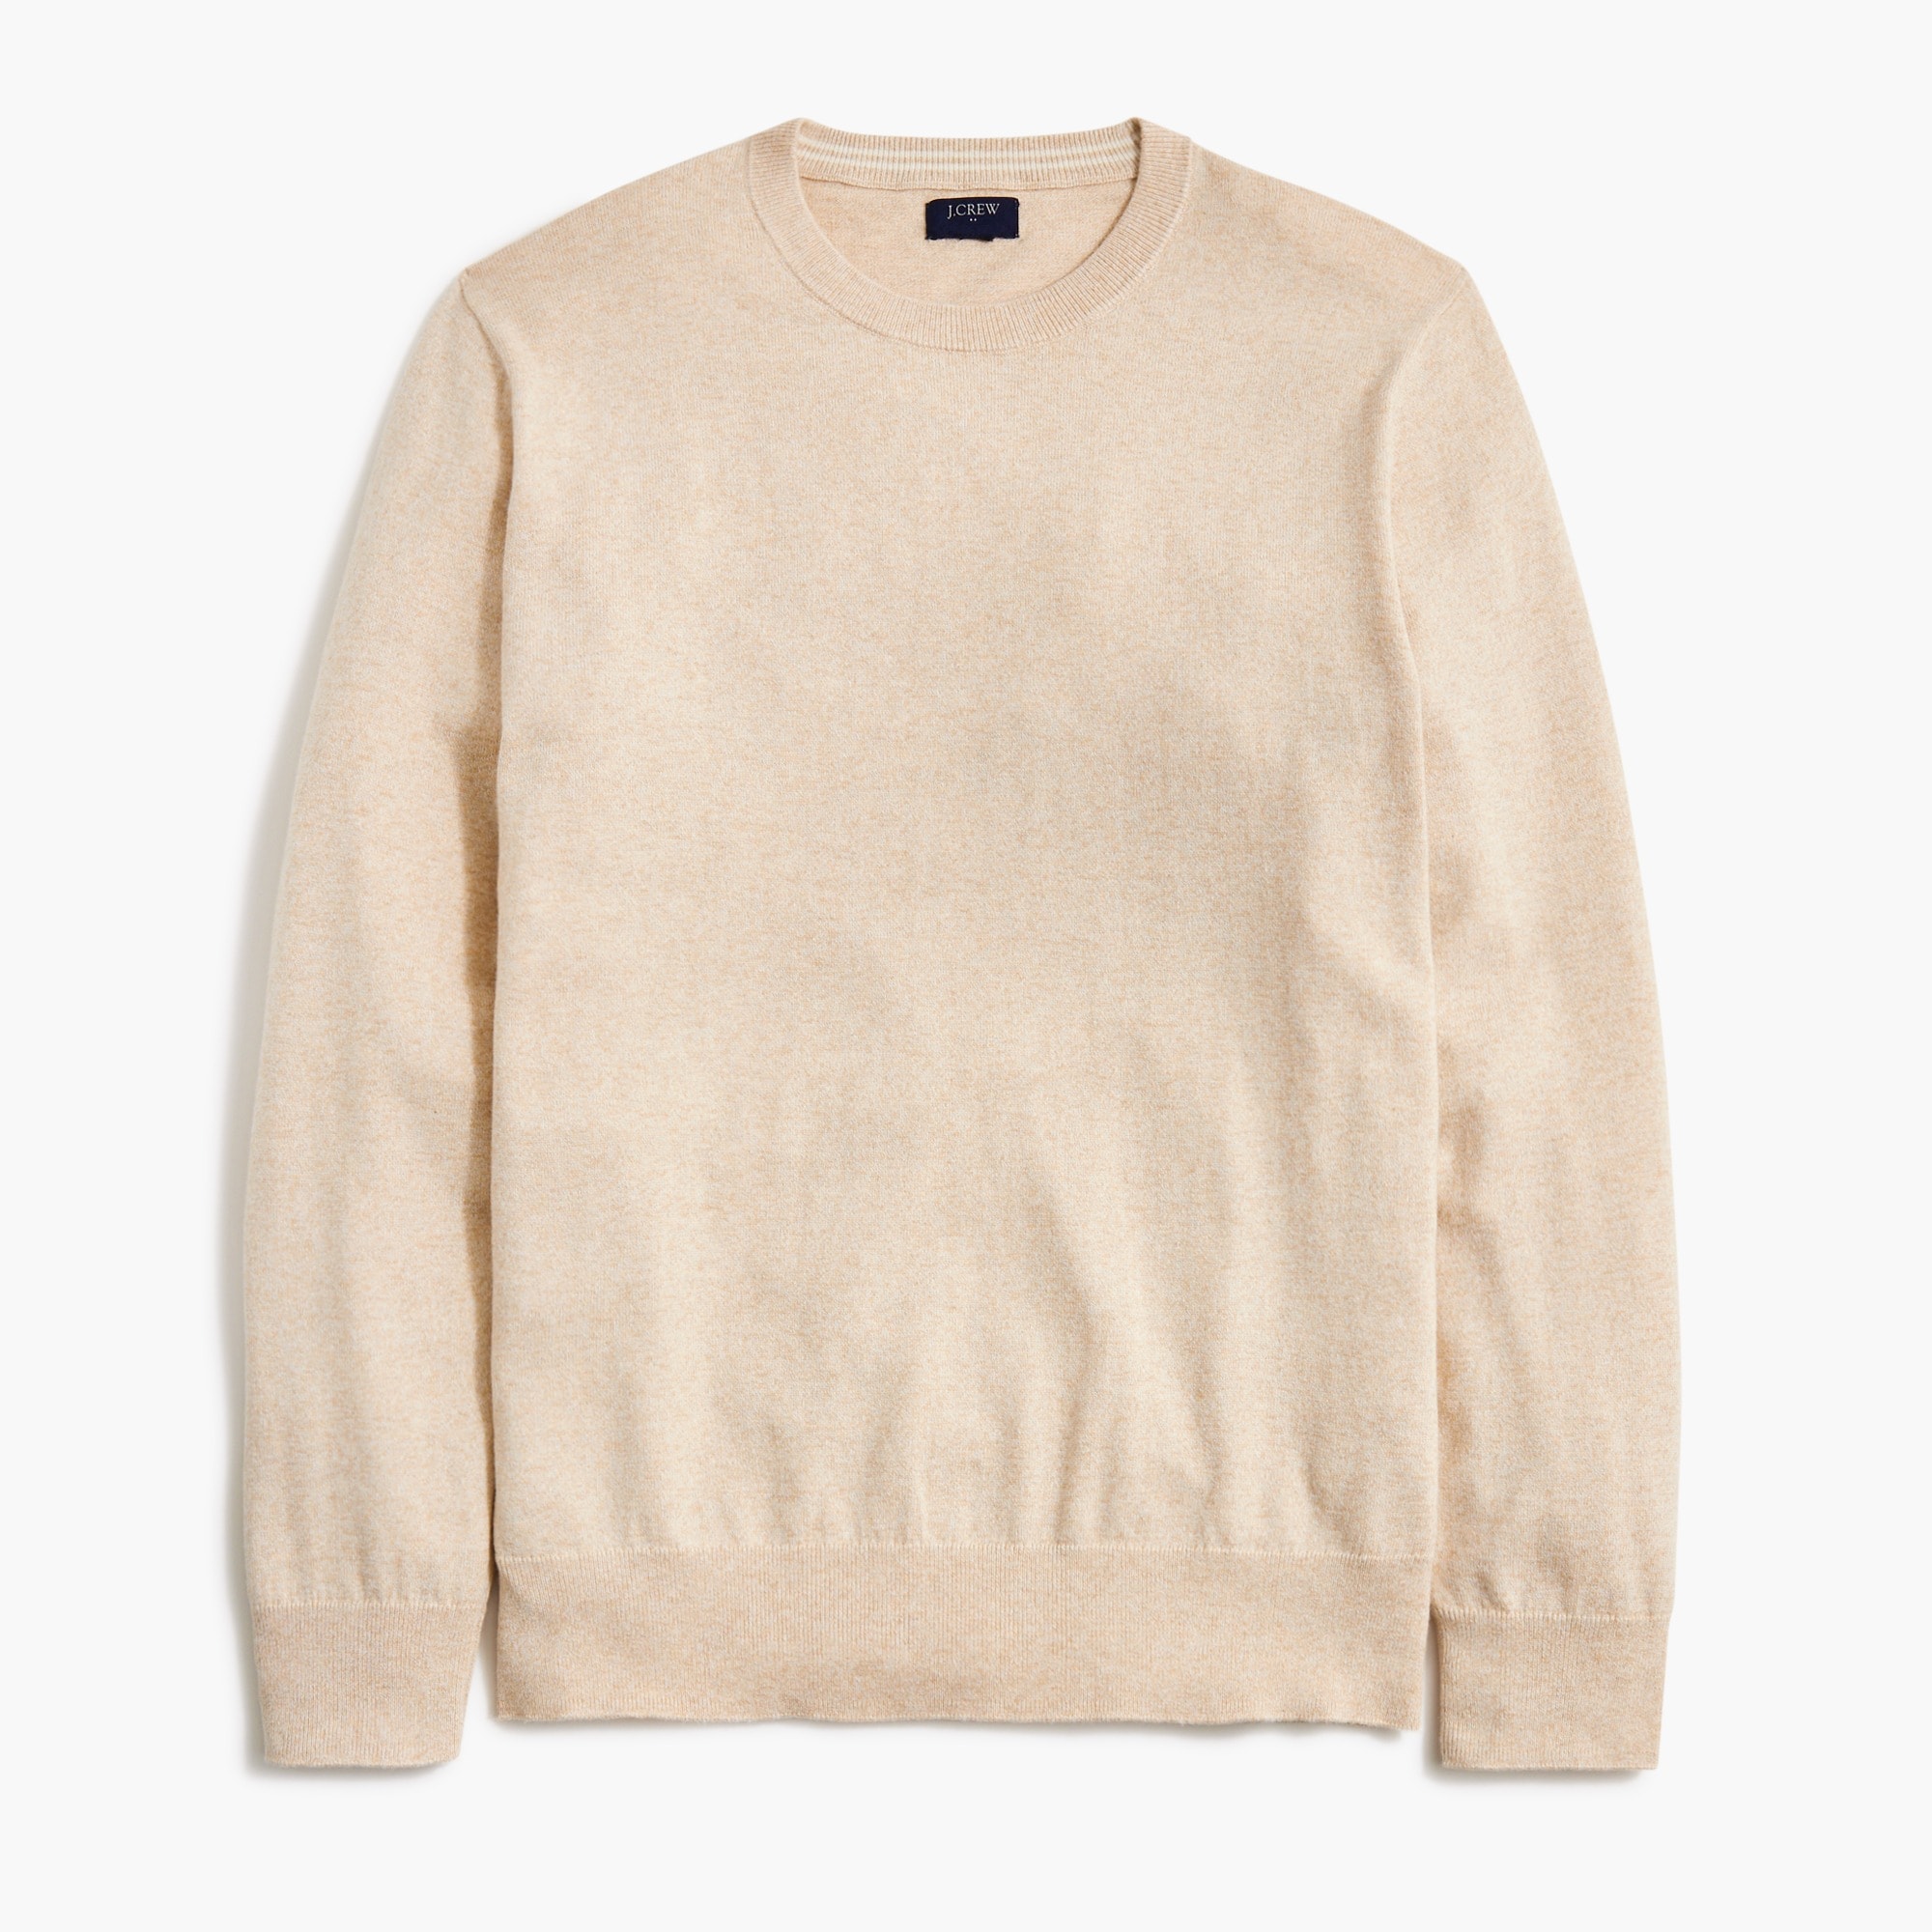  Soft cotton-blend crewneck pullover